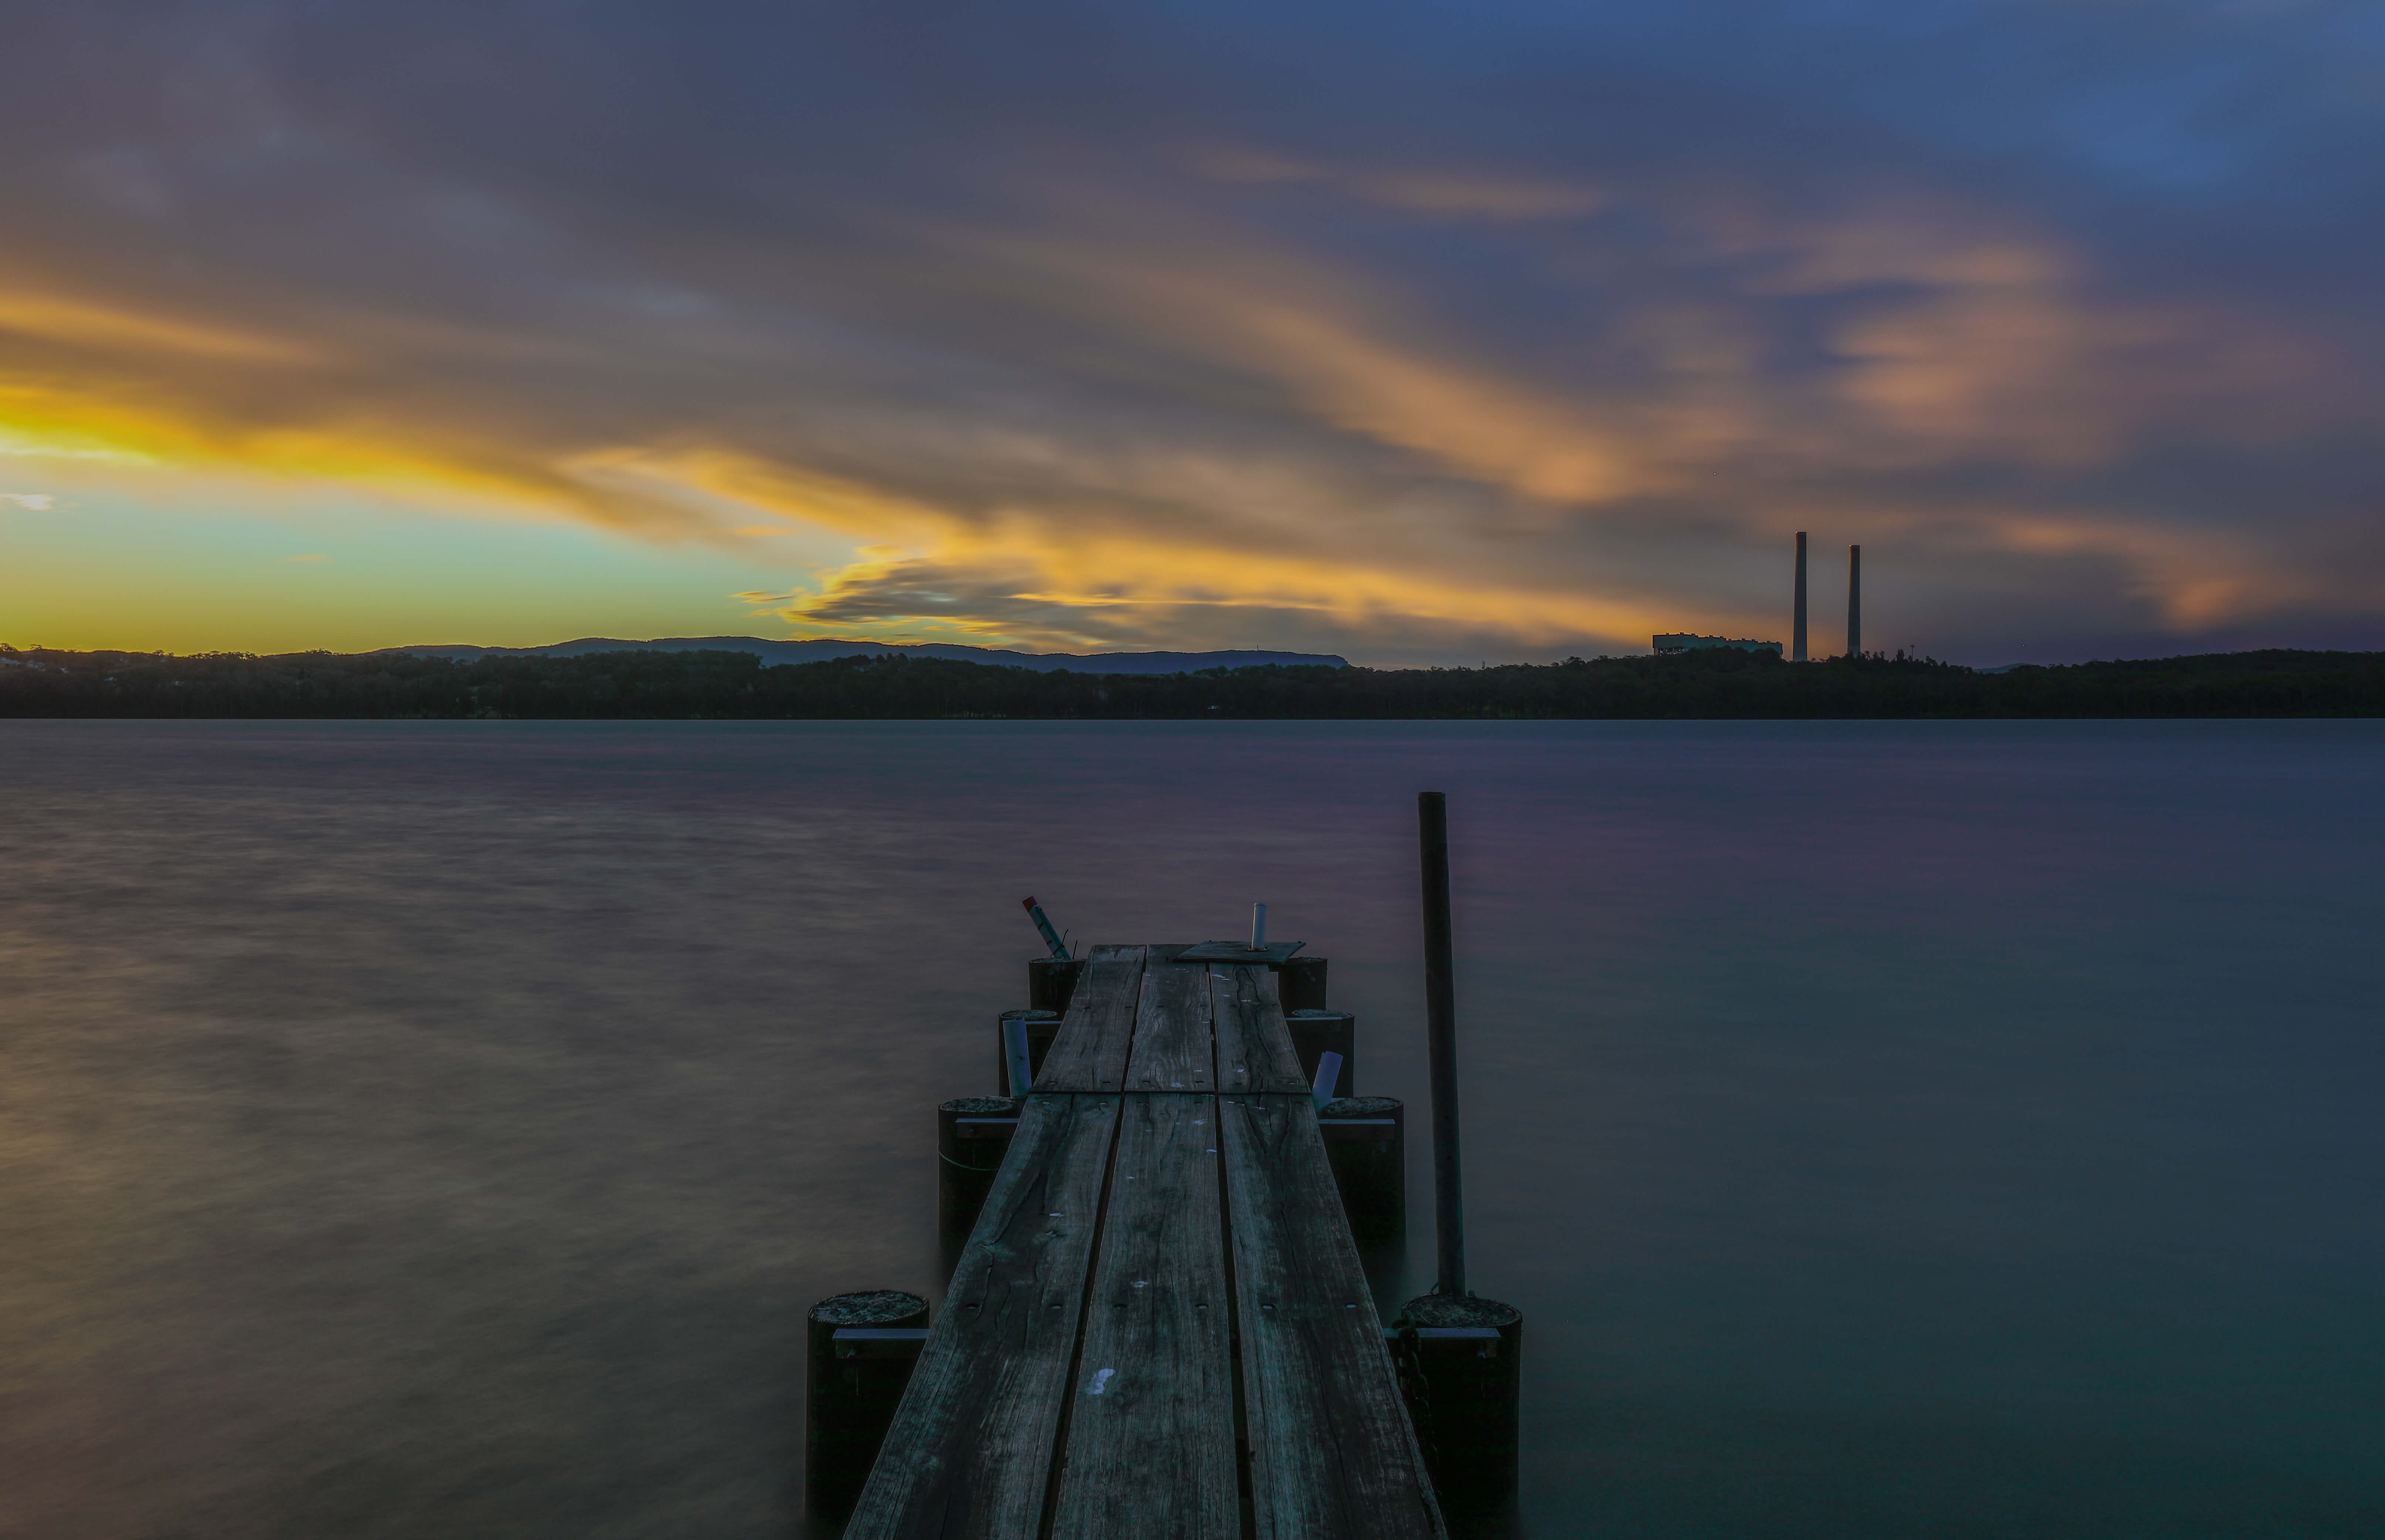 Image of pier on Lake Macquarie taken at sunset by Dr Chris Brown